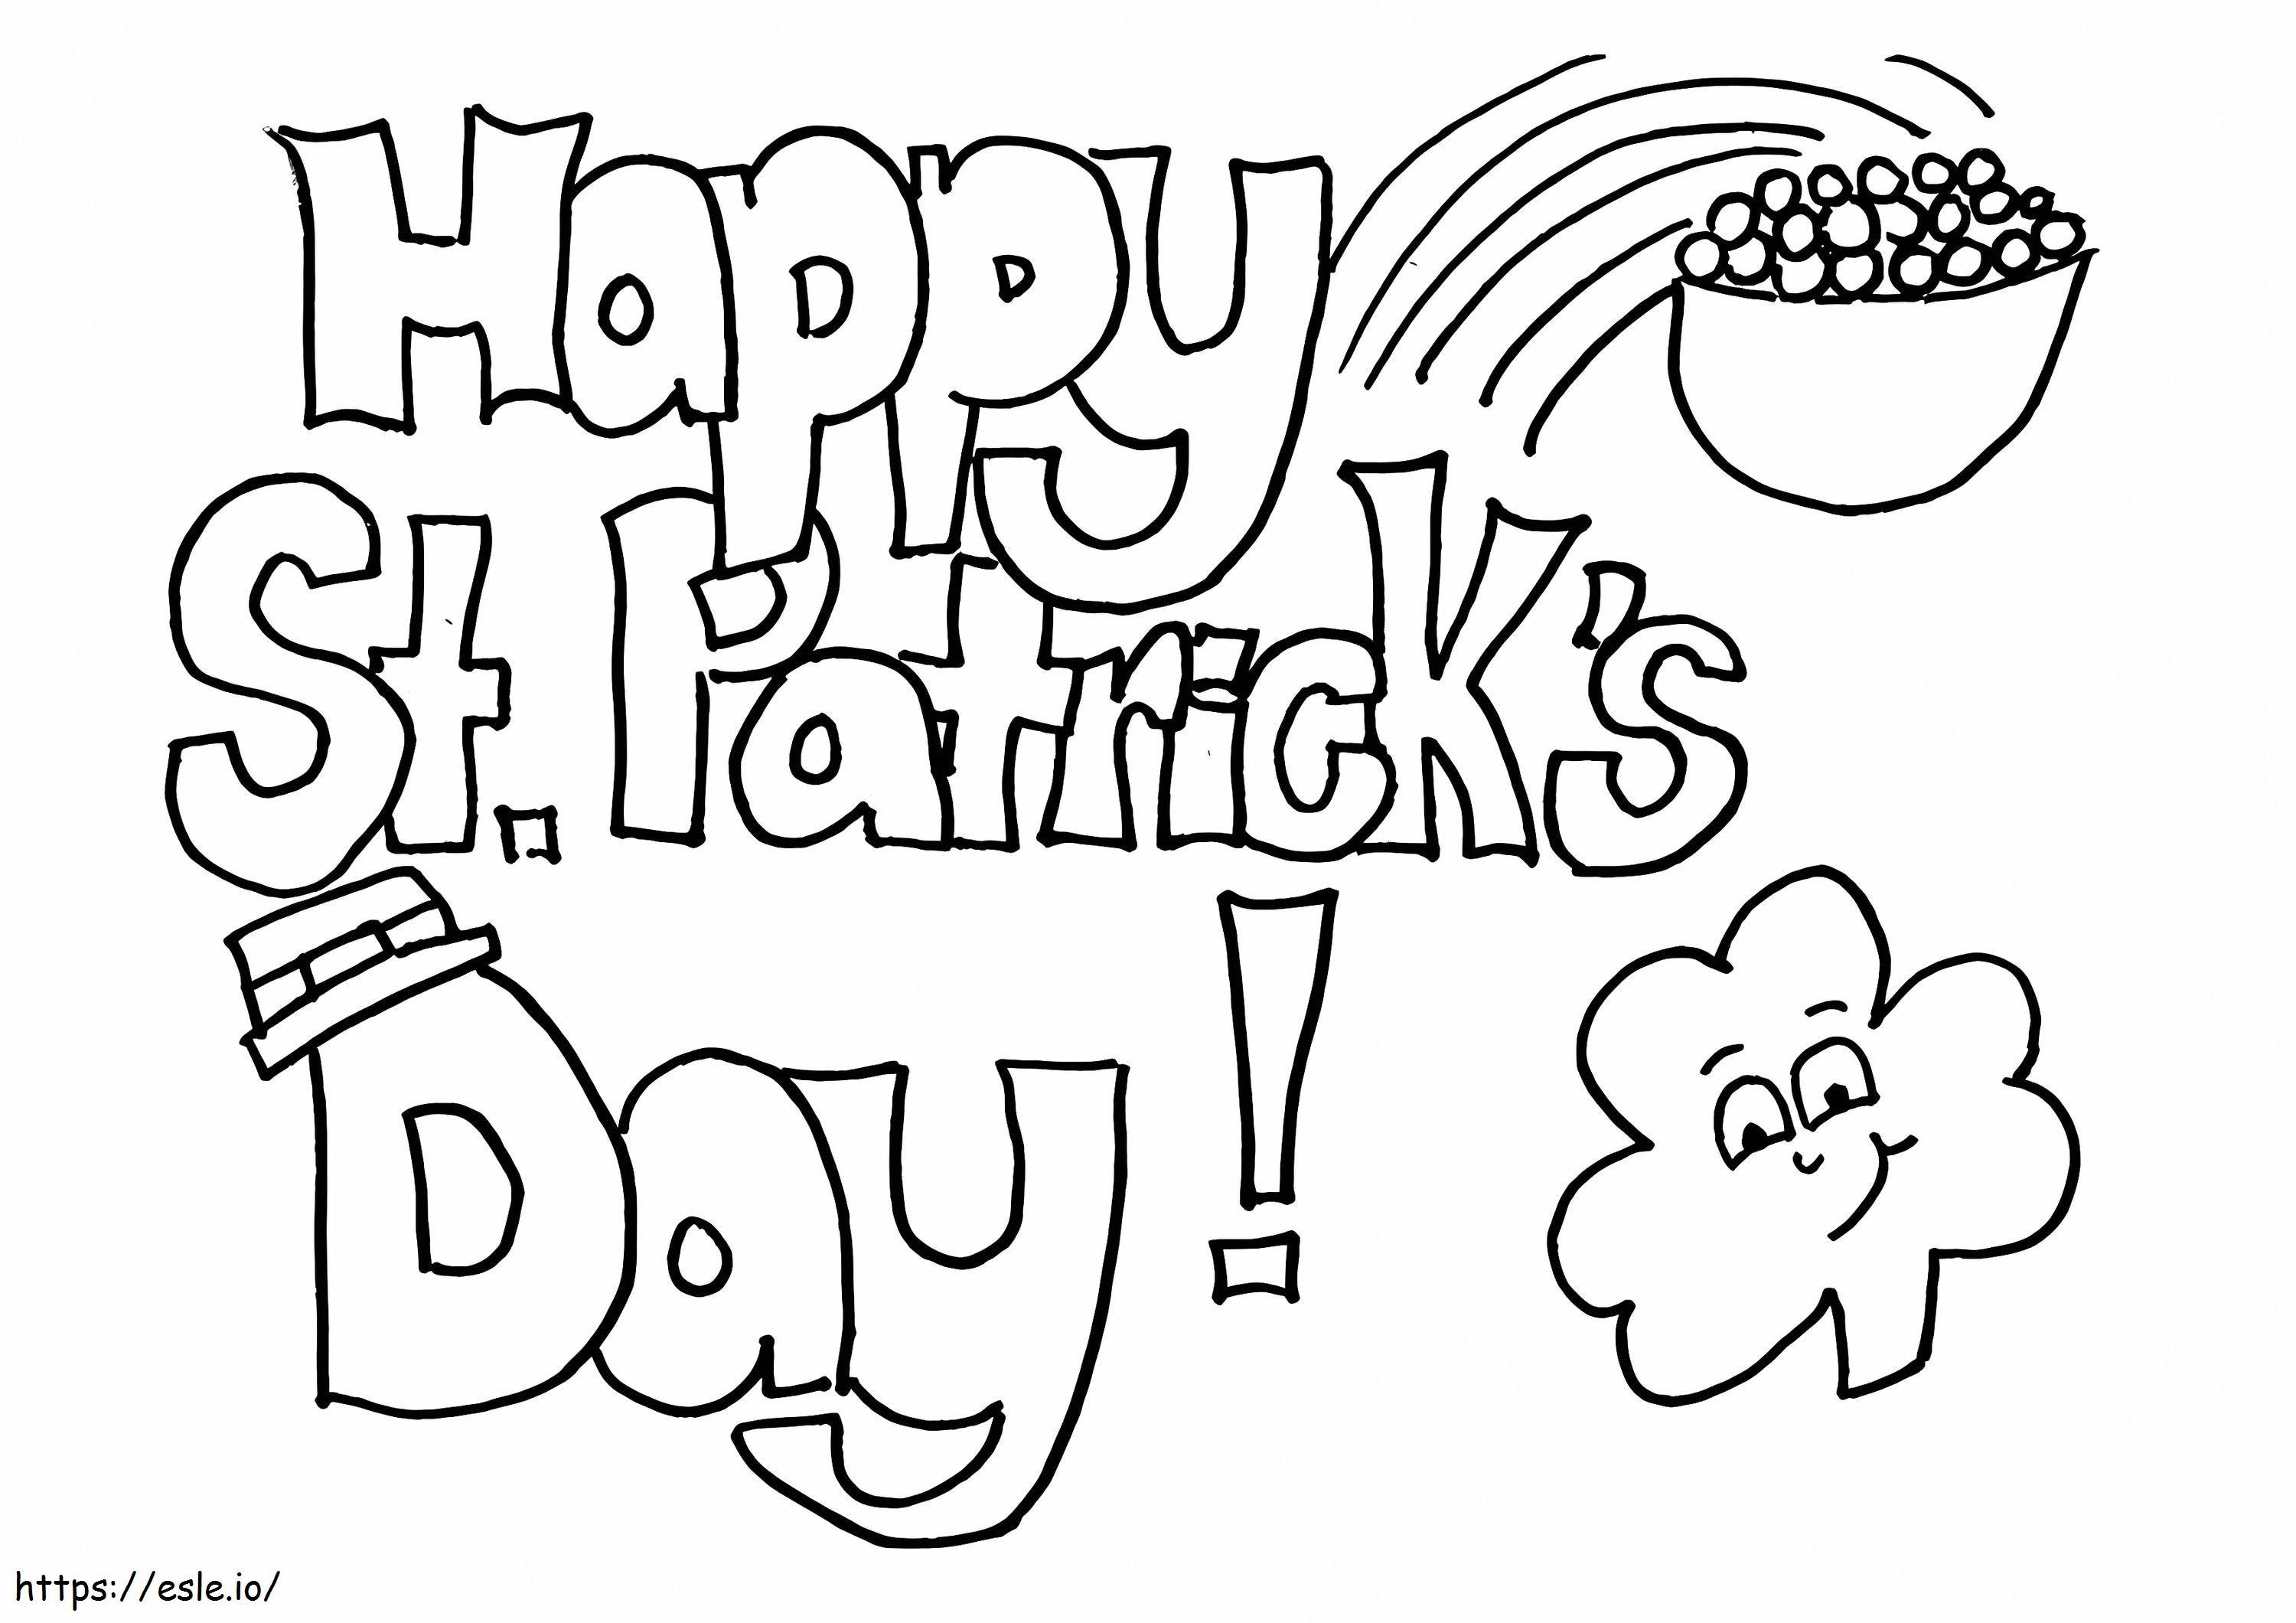  The Happy St Patrick's Day A4 E1600442906495 kleurplaat kleurplaat